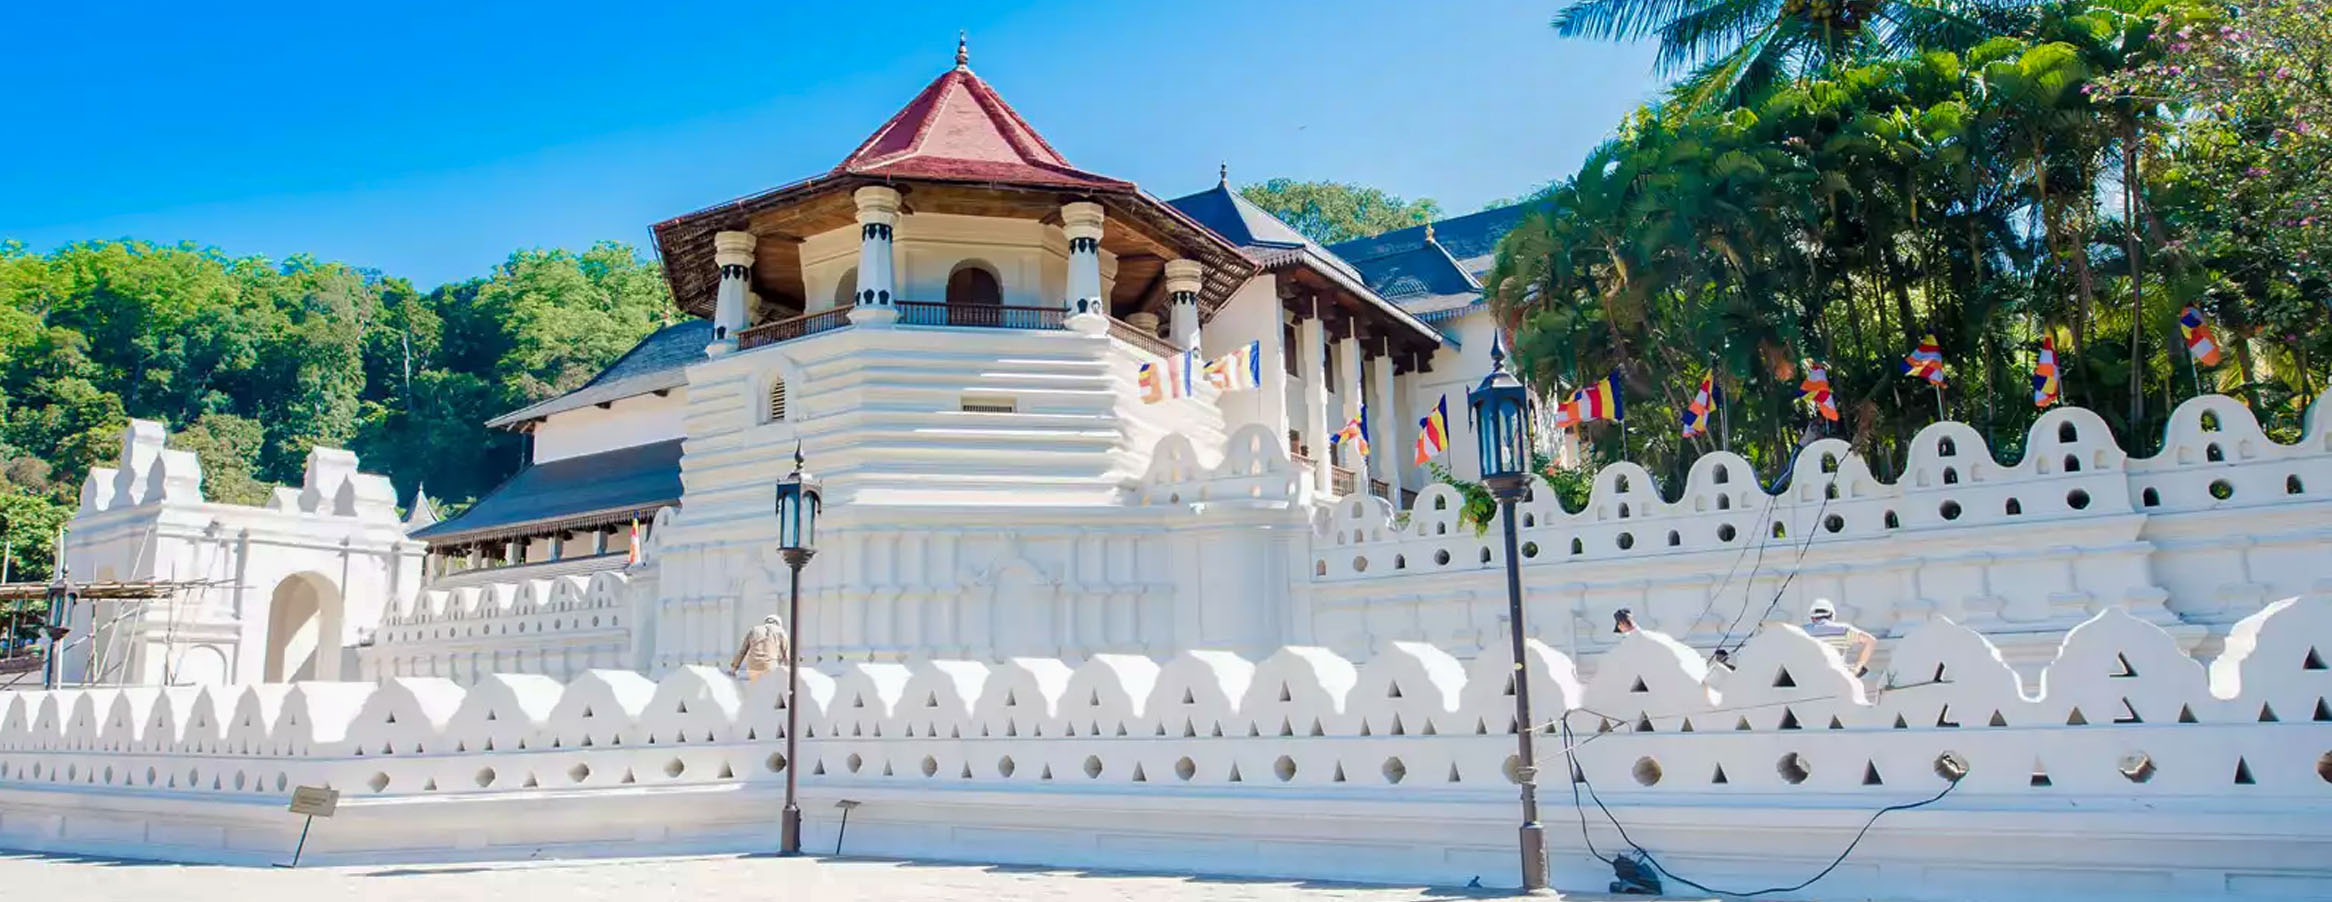 Kandy Tour in Sri Lanka | Rock Lanka Tours